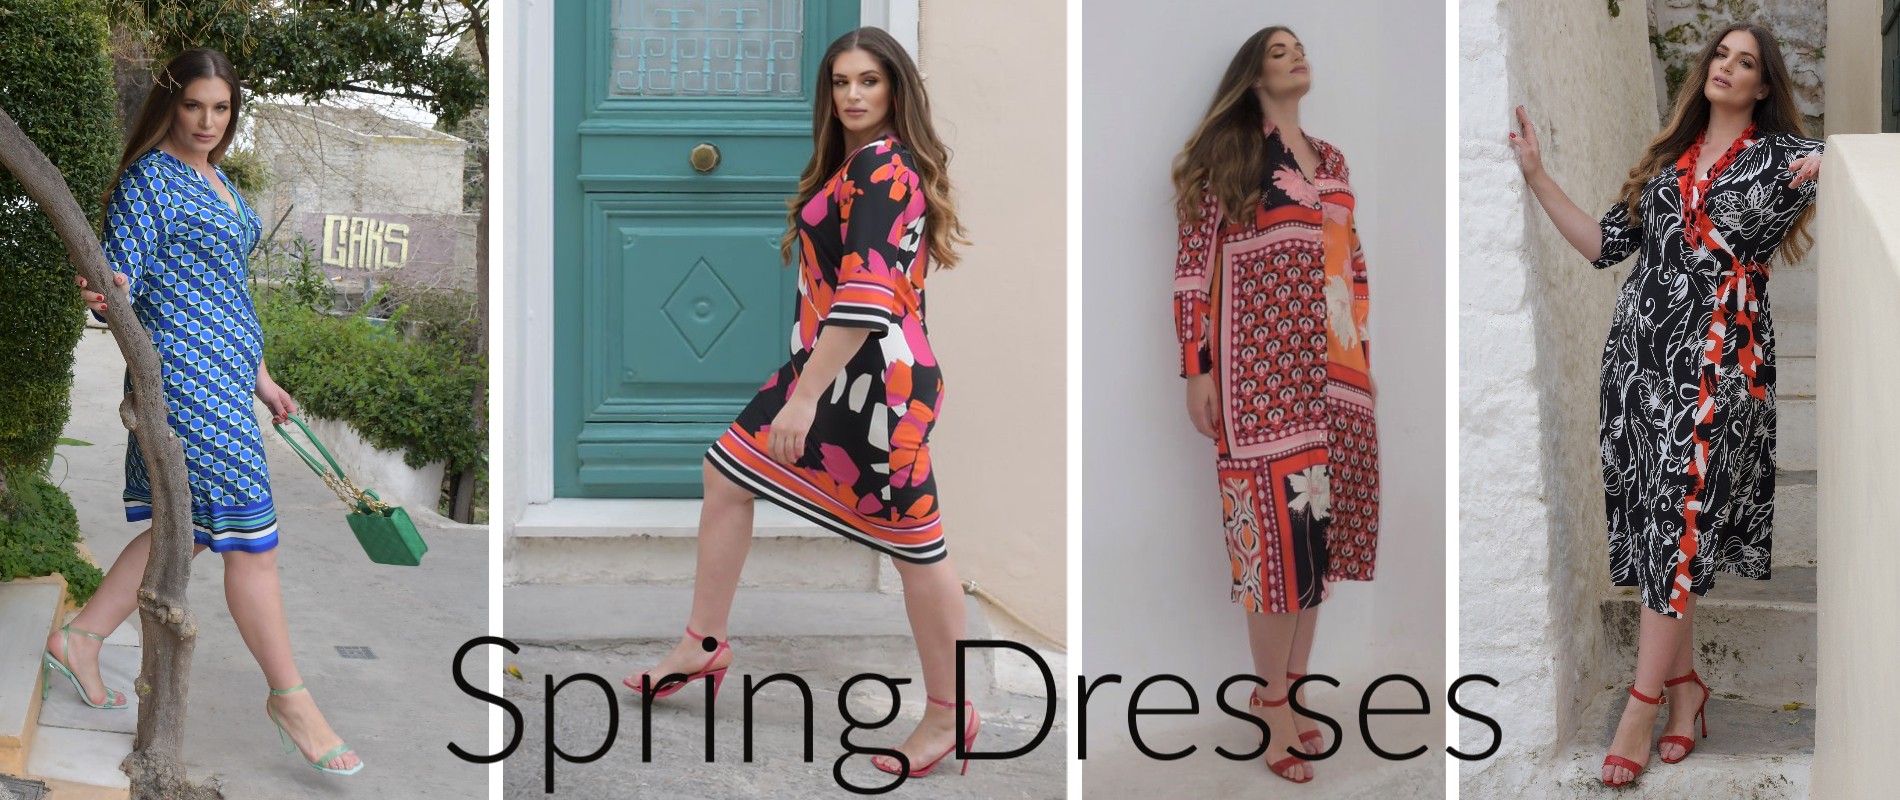 Plus size Spring Dresses!